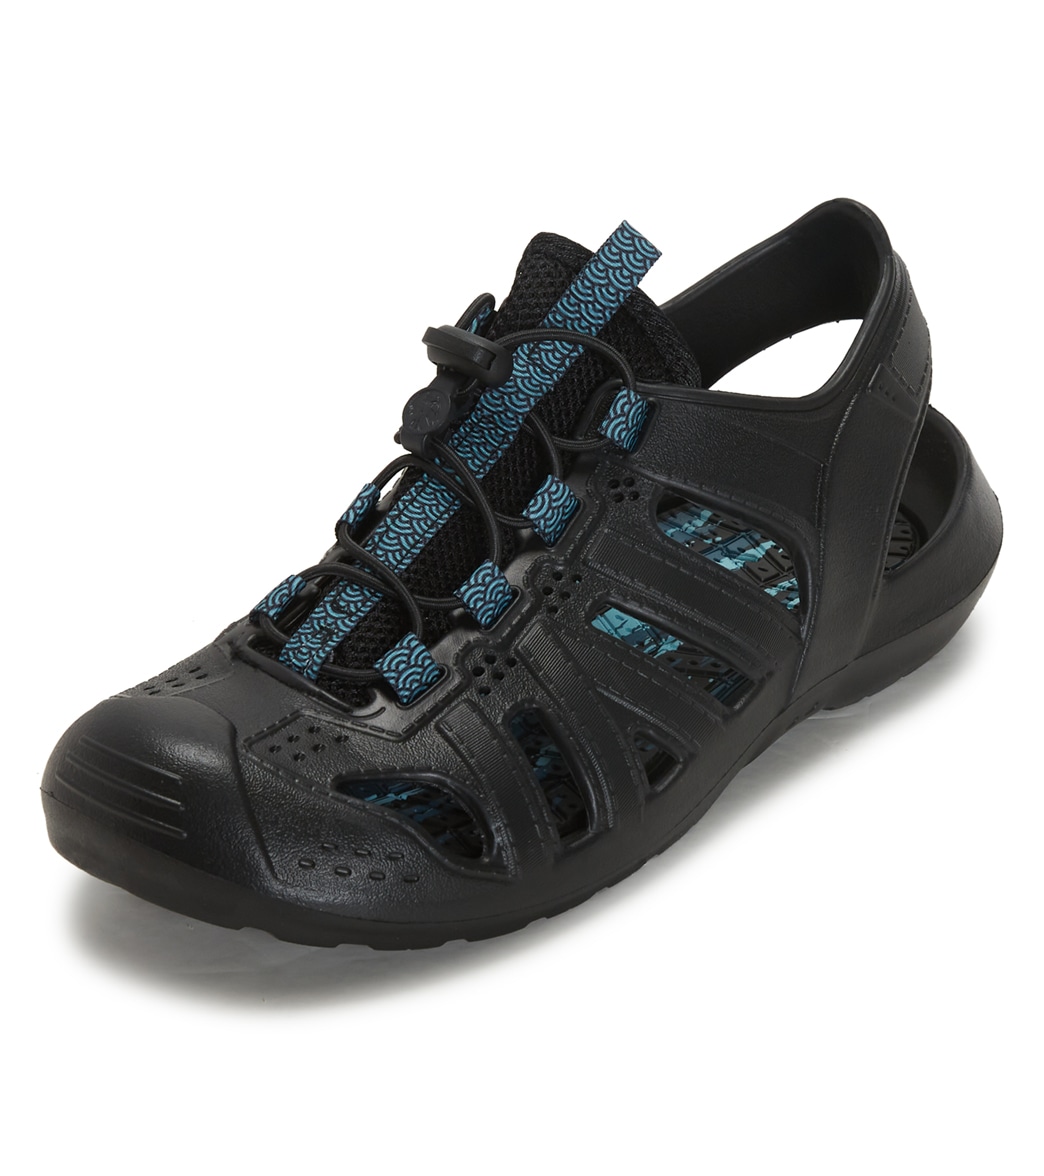 Northside Women's Pacific Drift Water Shoes - Black/Aqua 6 - Swimoutlet.com